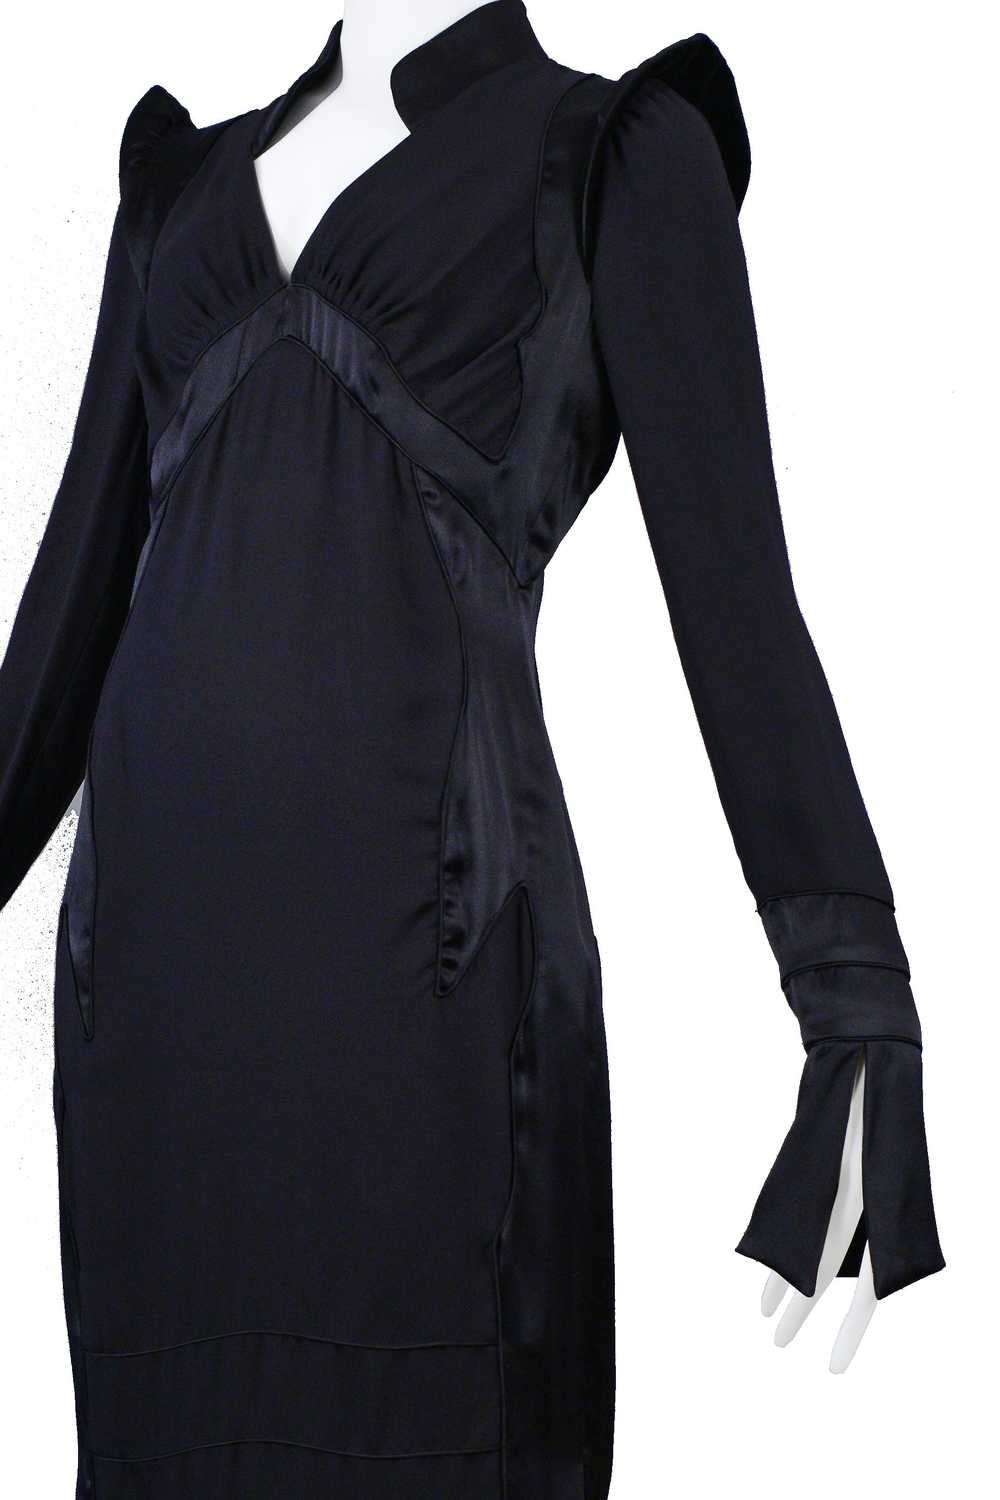 YSL BY TOM FORD BLACK SATIN MANDARIN DRESS 2004 - image 5